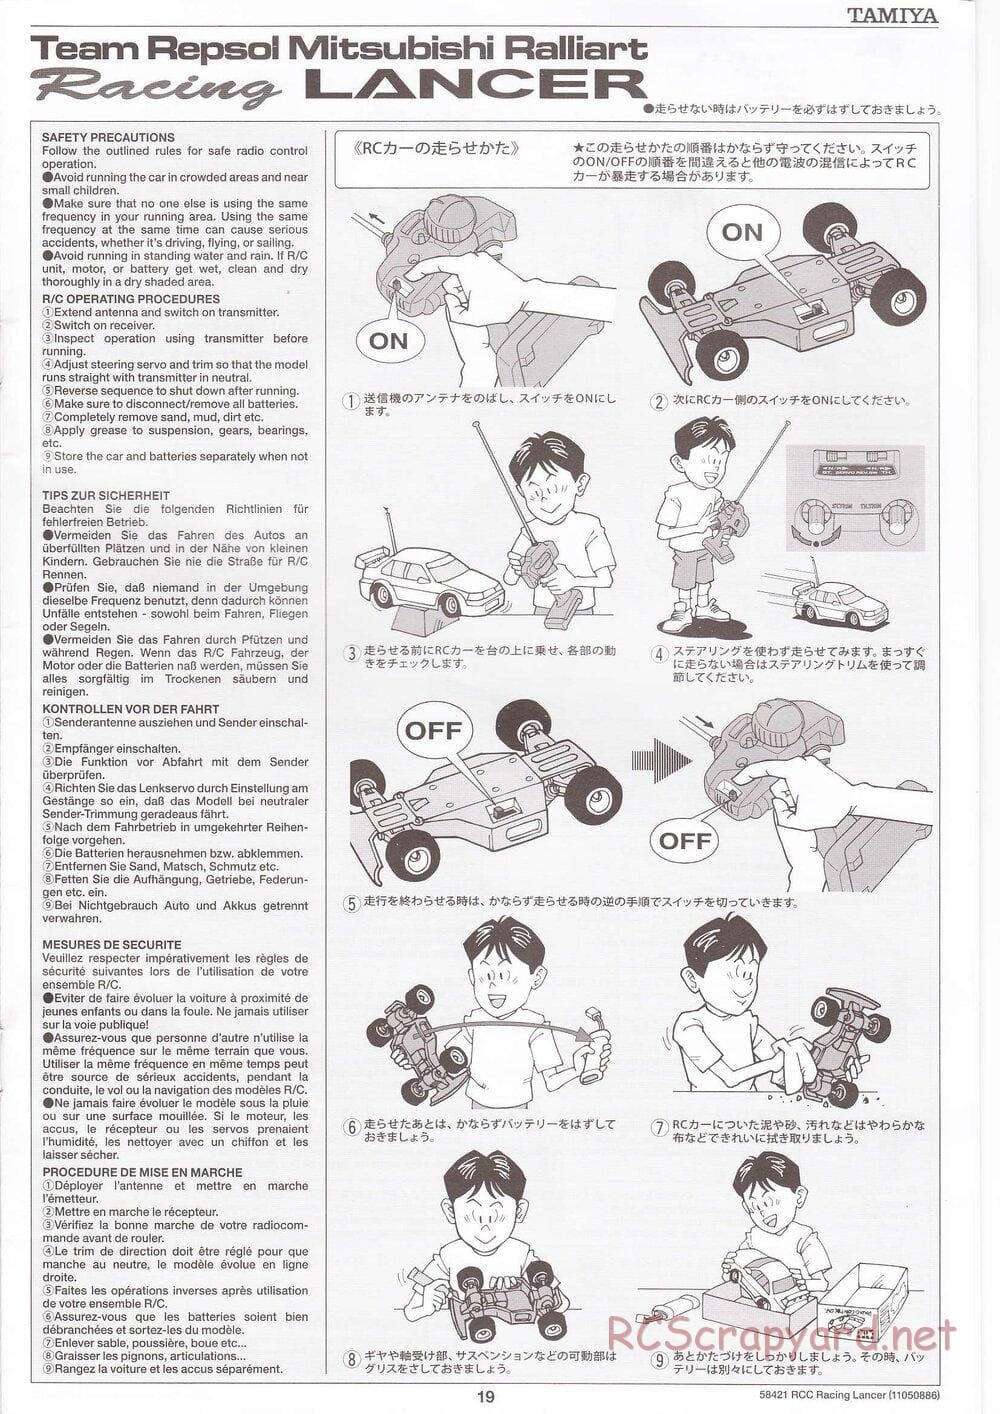 Tamiya - Mitsubishi Racing Lancer - DF-01 Chassis - Manual - Page 19